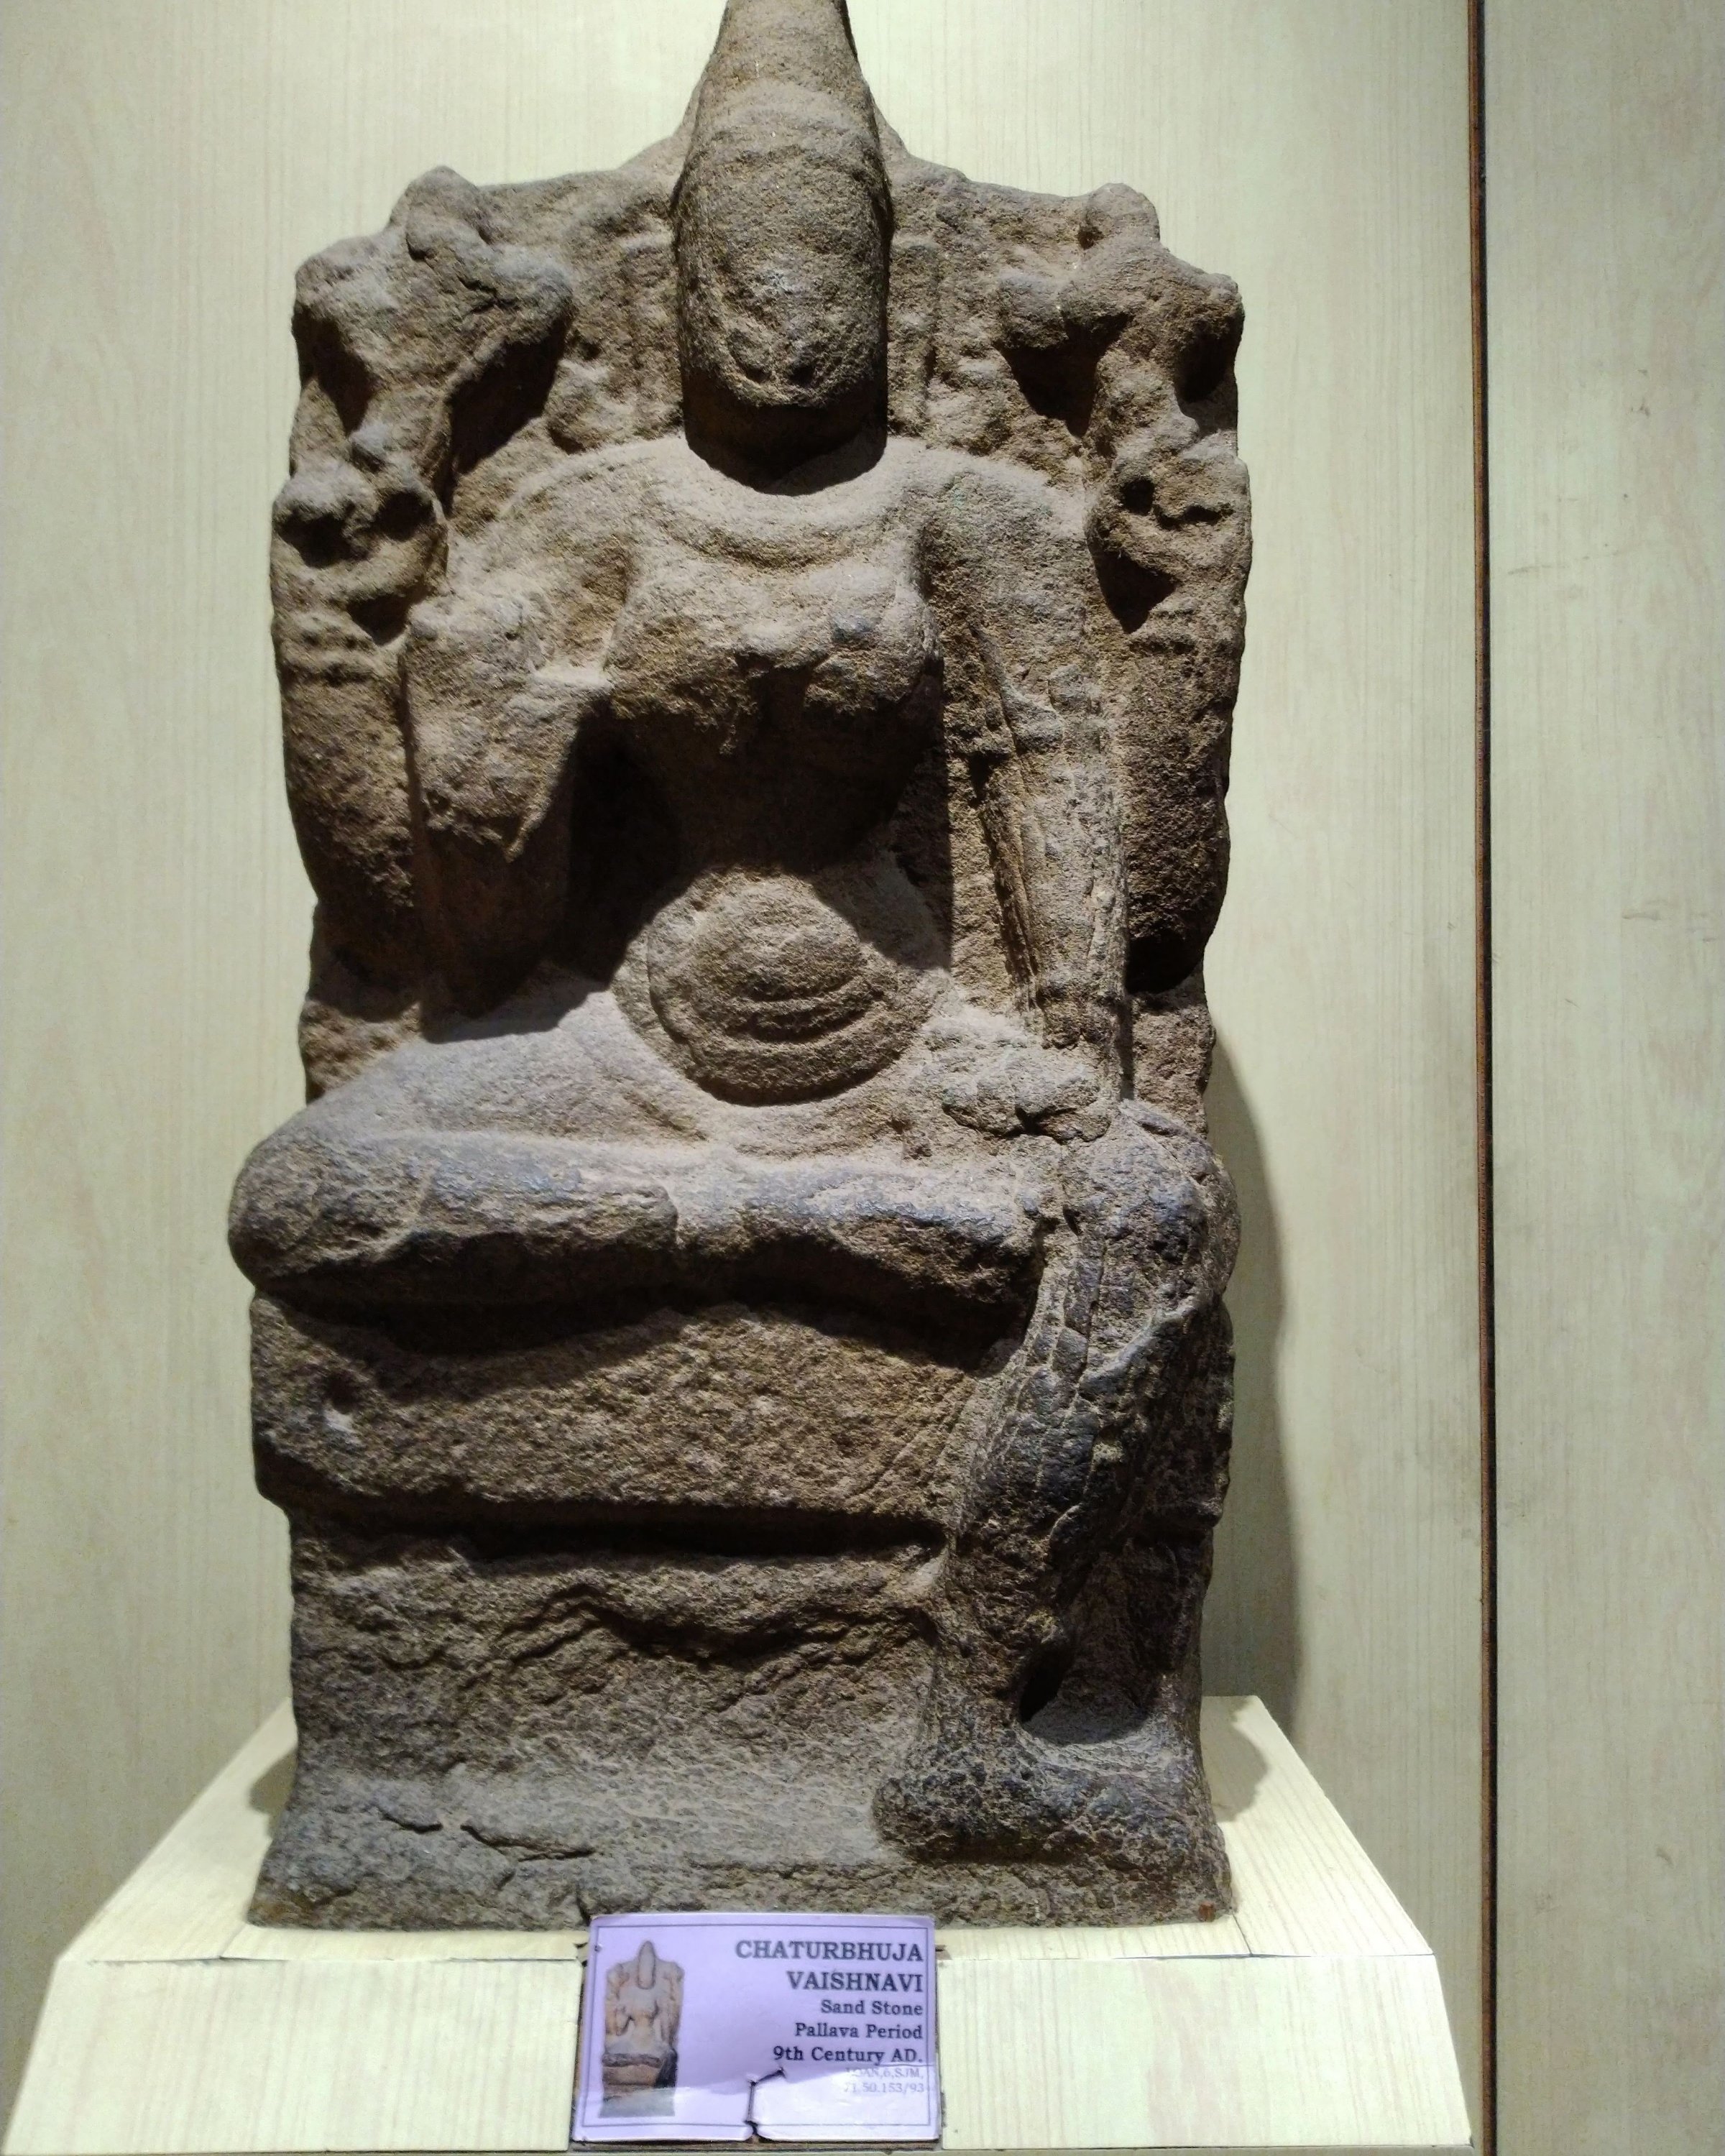 Chaturbhuja Vaishnavi sculpture from 9th Century AD, India